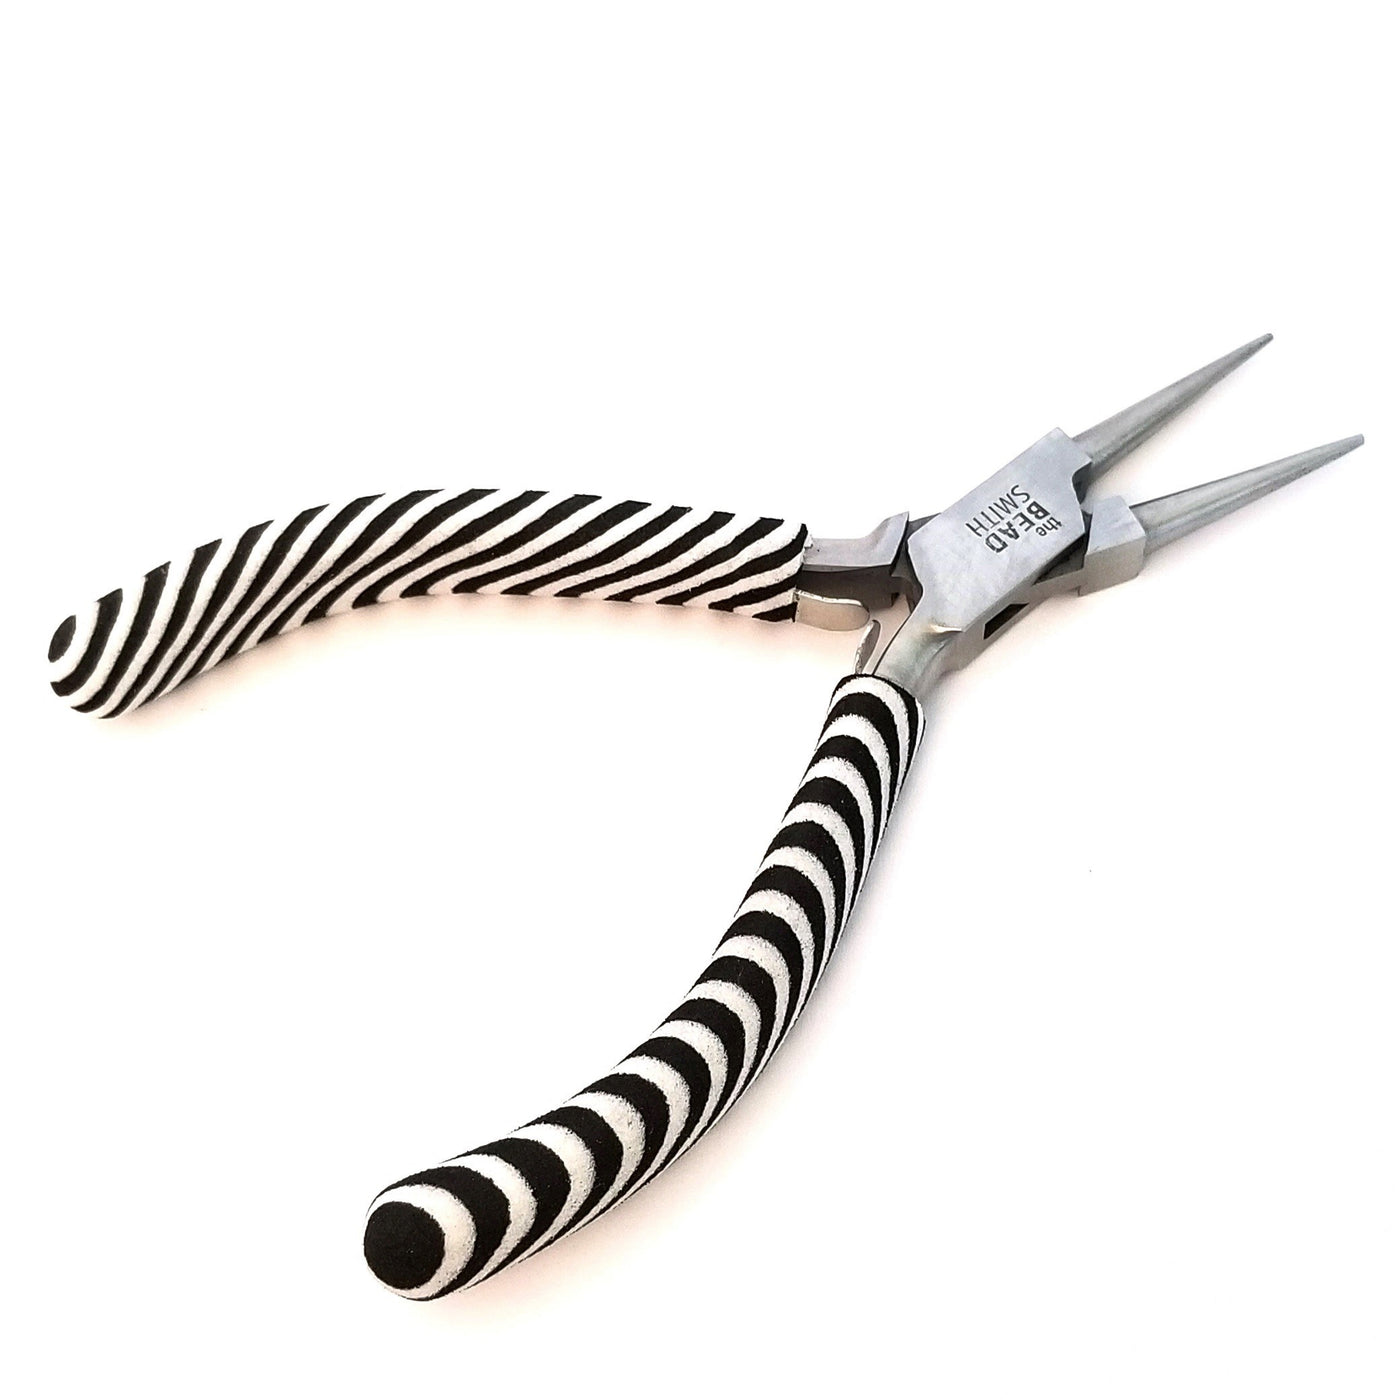 Bent Chain Nose Pliers (Zebra) – Craftgarden Beads